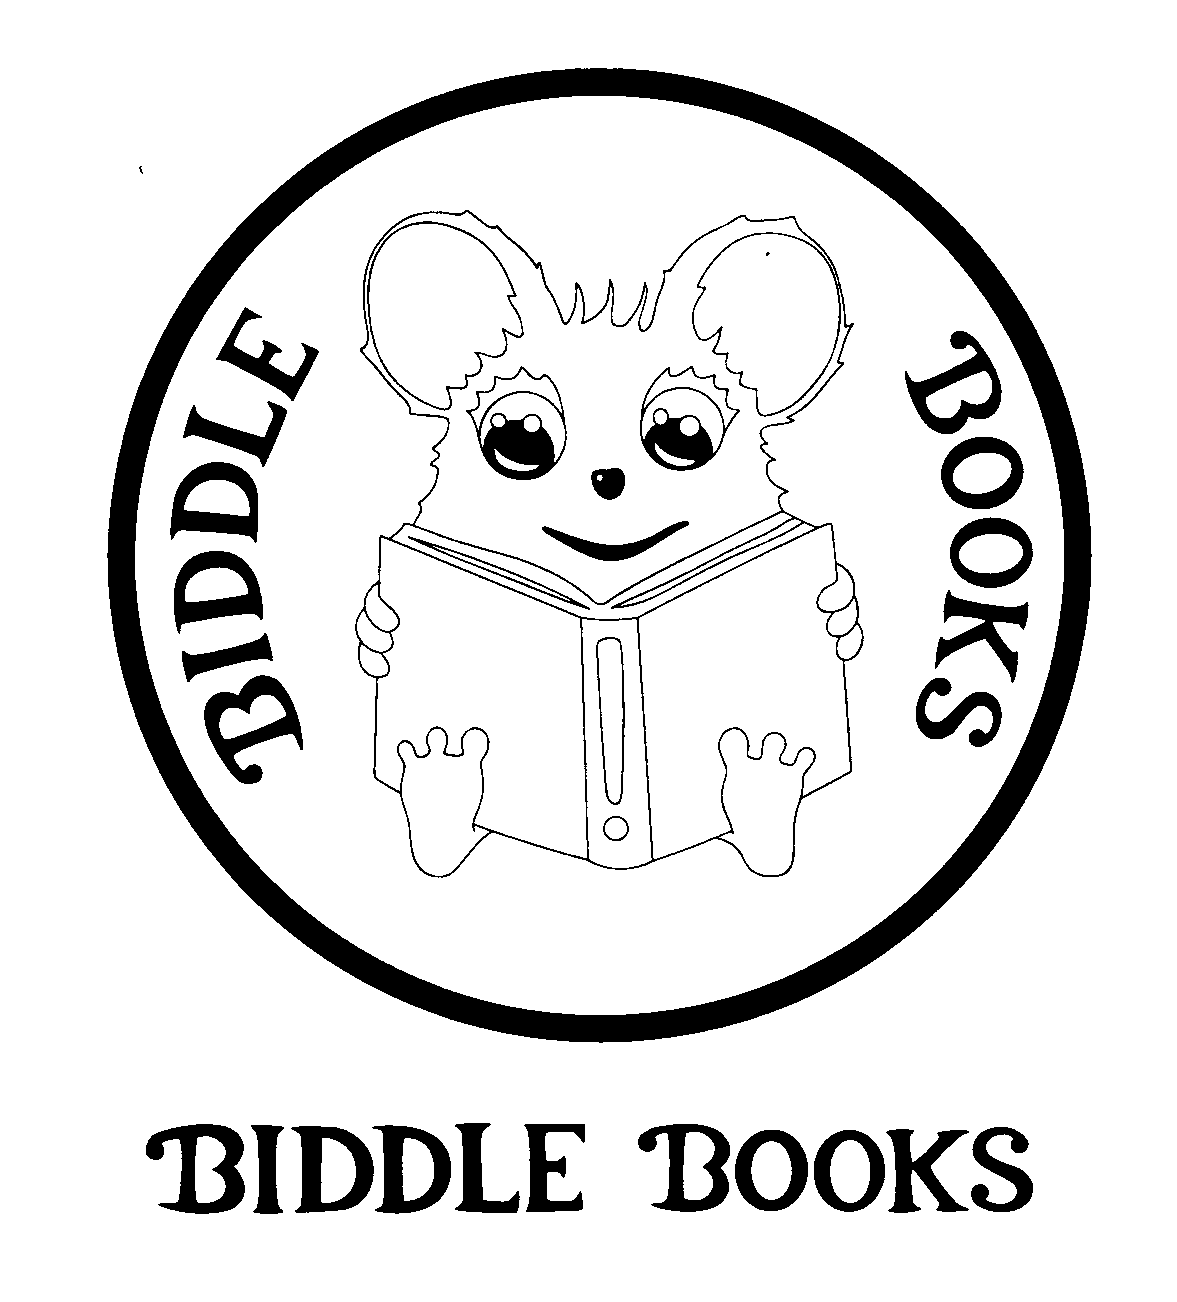  BIDDLE BOOKS